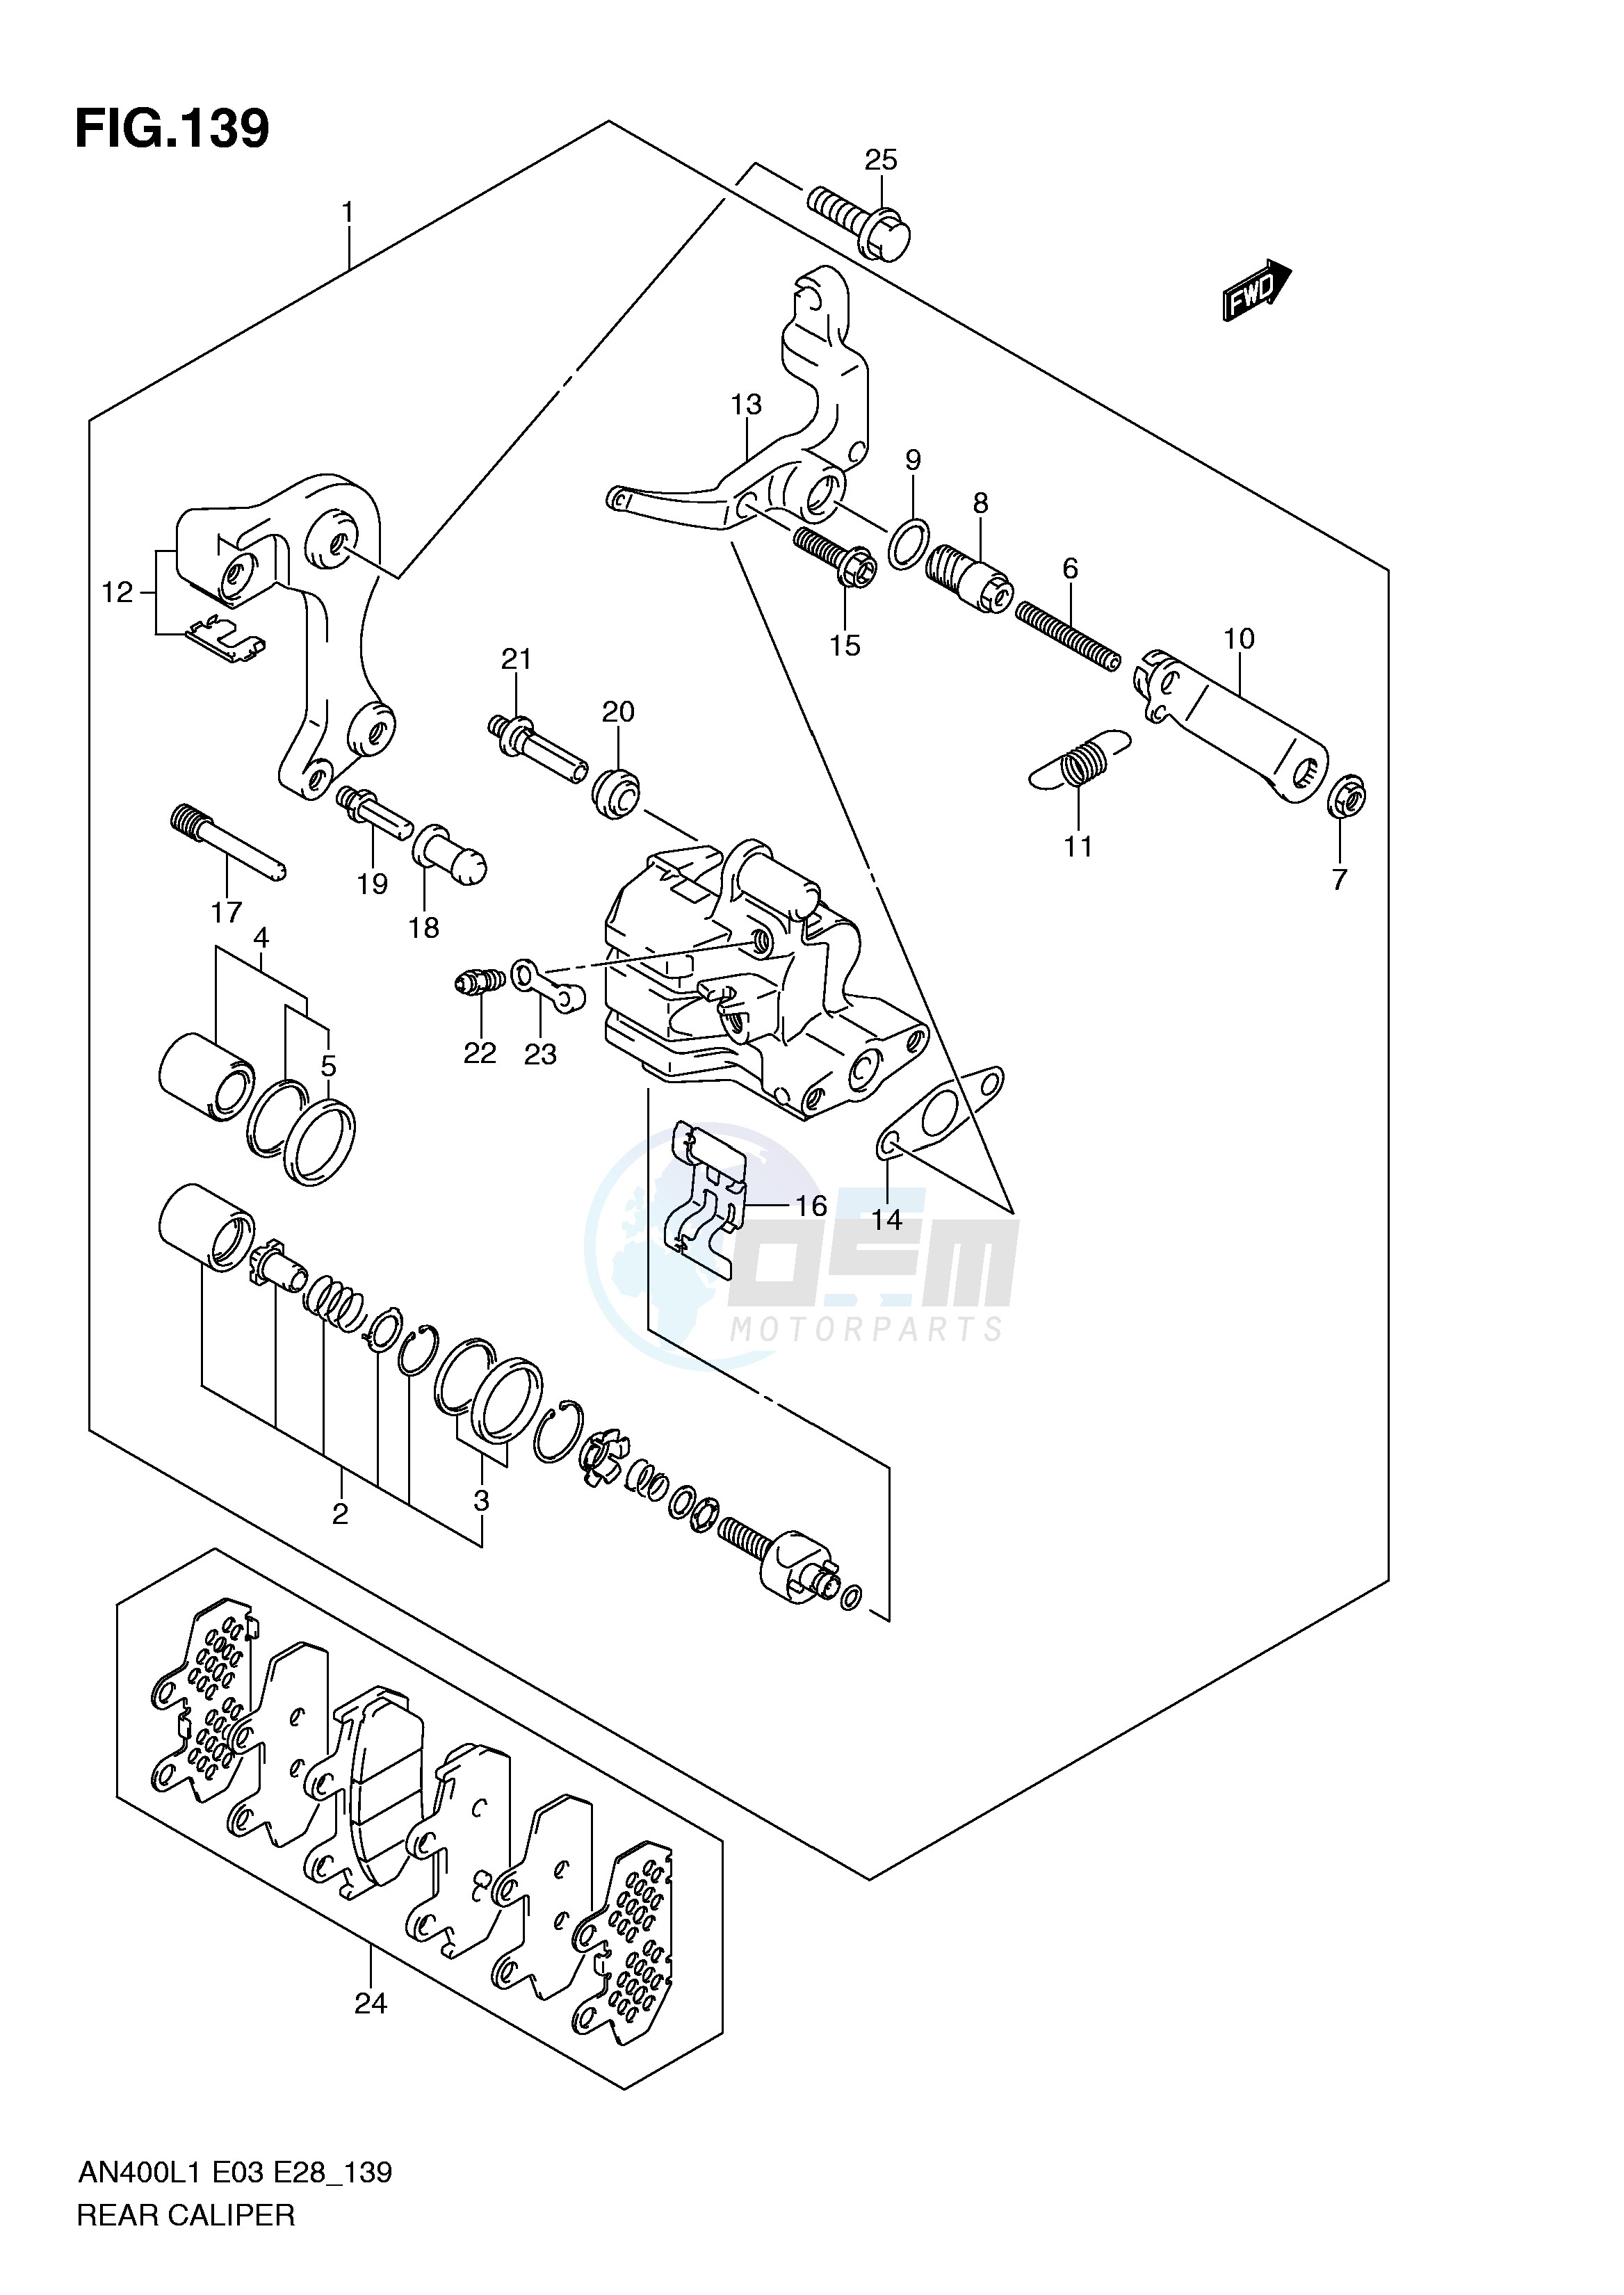 REAR CALIPER (AN400L1 E3) blueprint